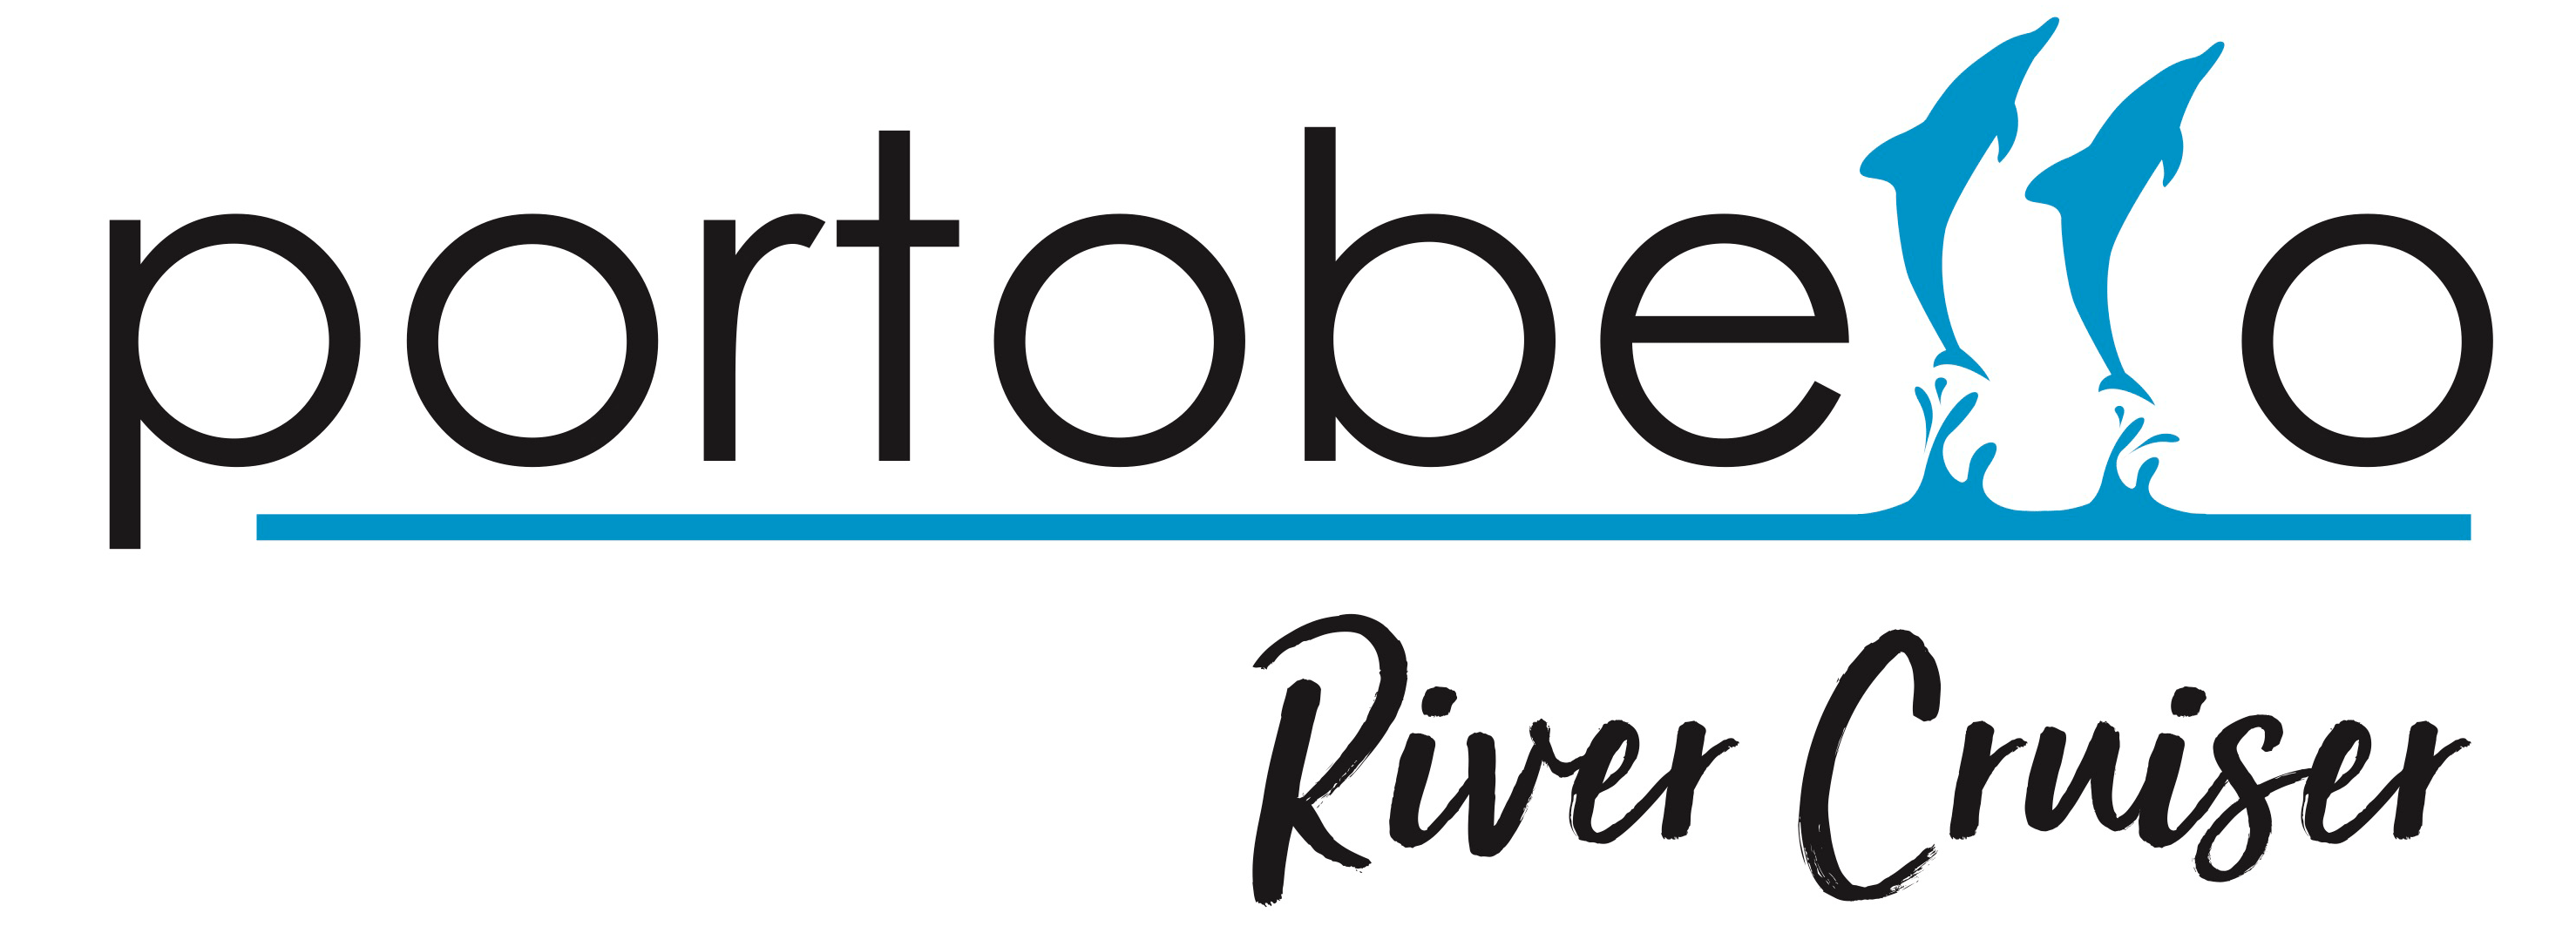 Portobello River Cruiser